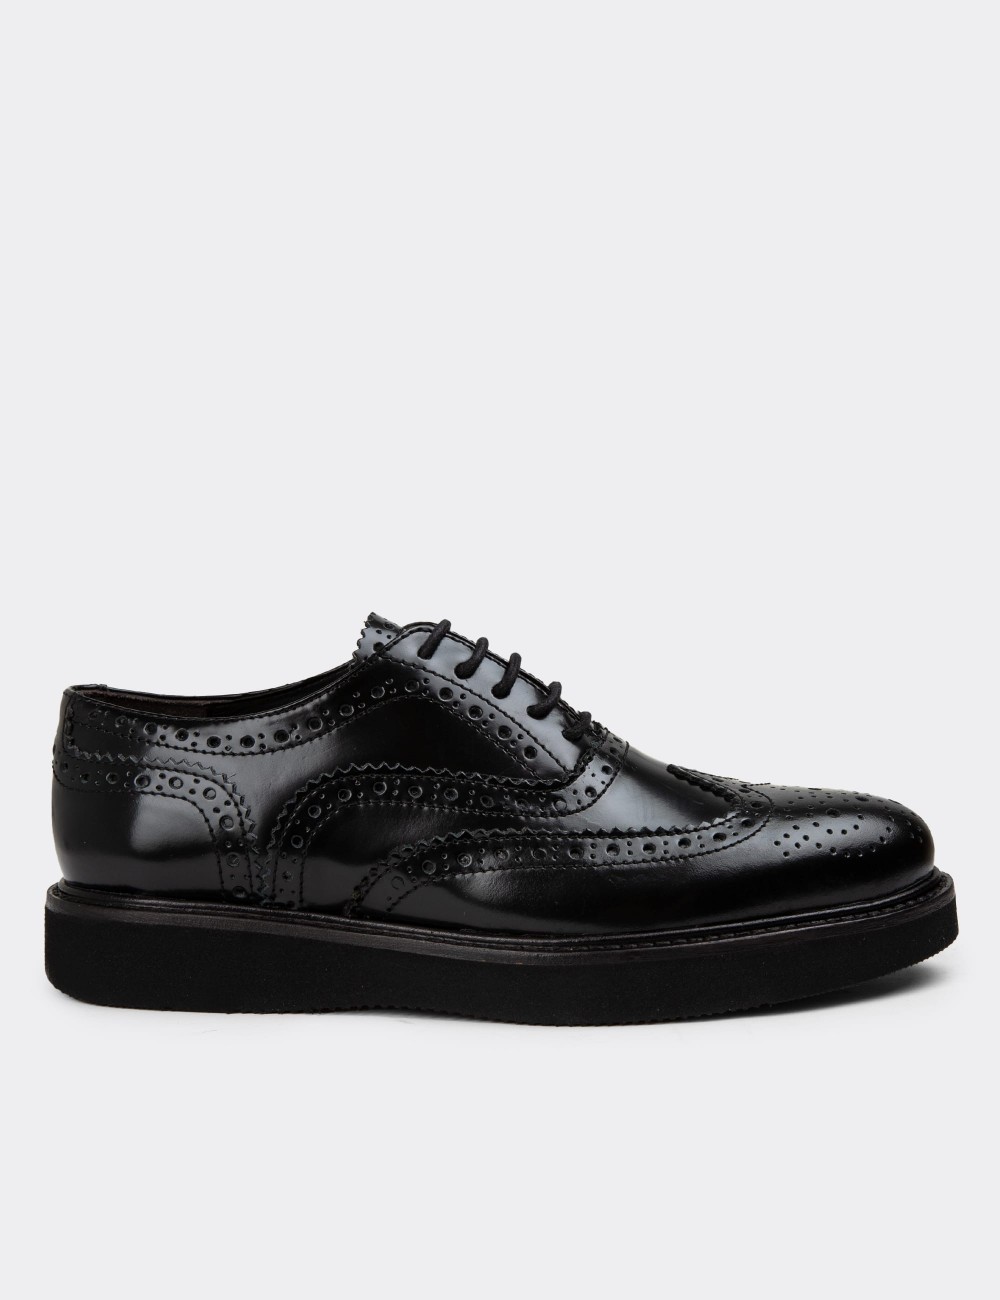 Black Leather Oxford Shoes - 01418ZSYHE01